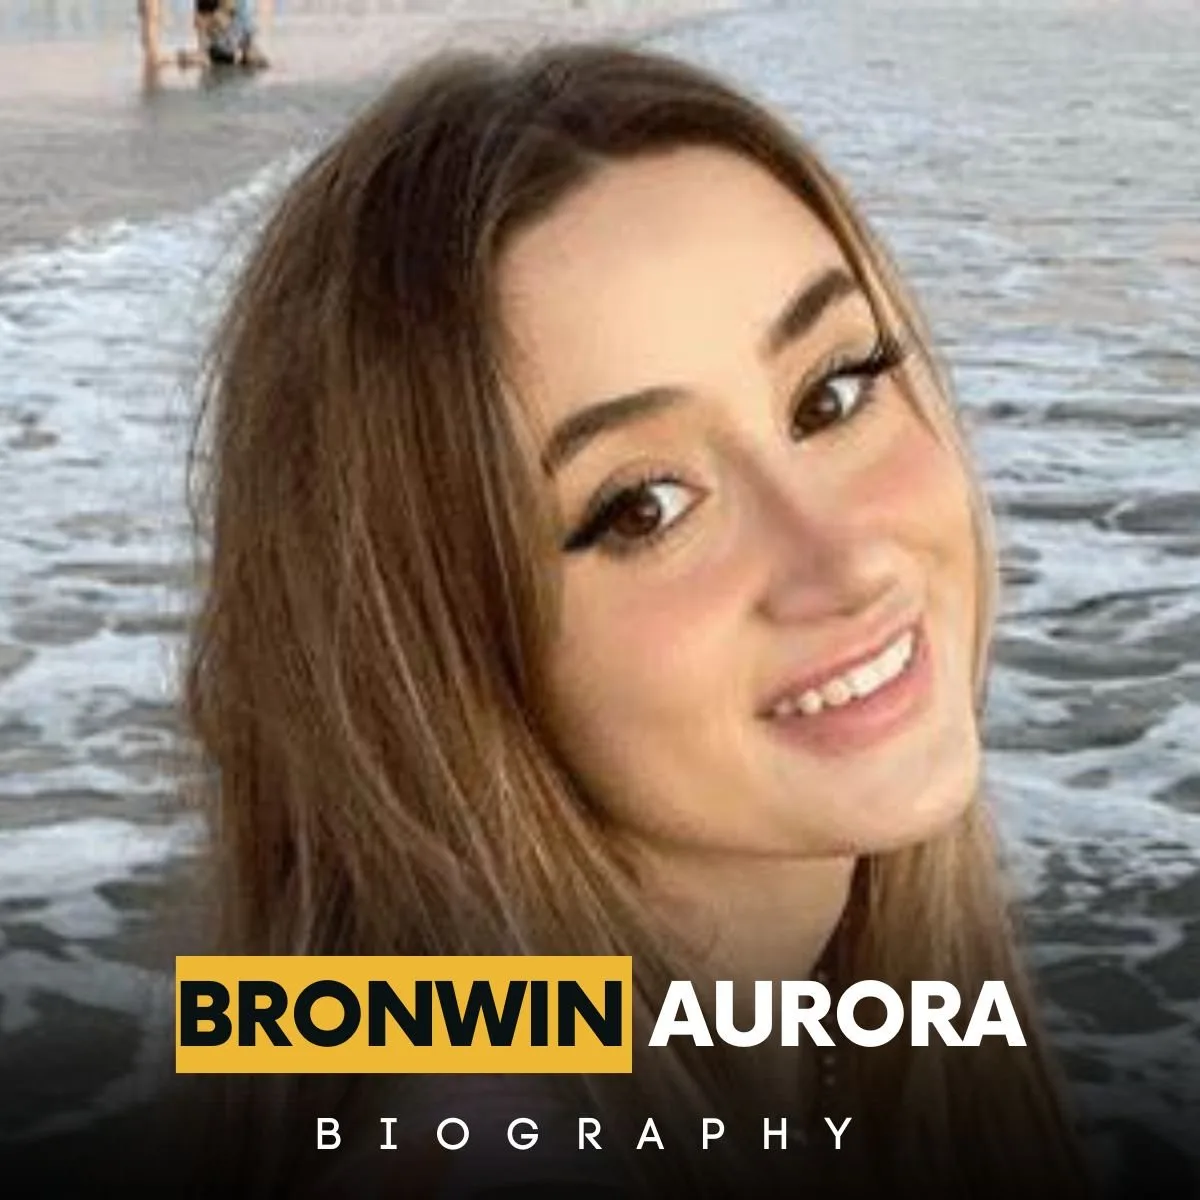 Bronwin Aurora Biography